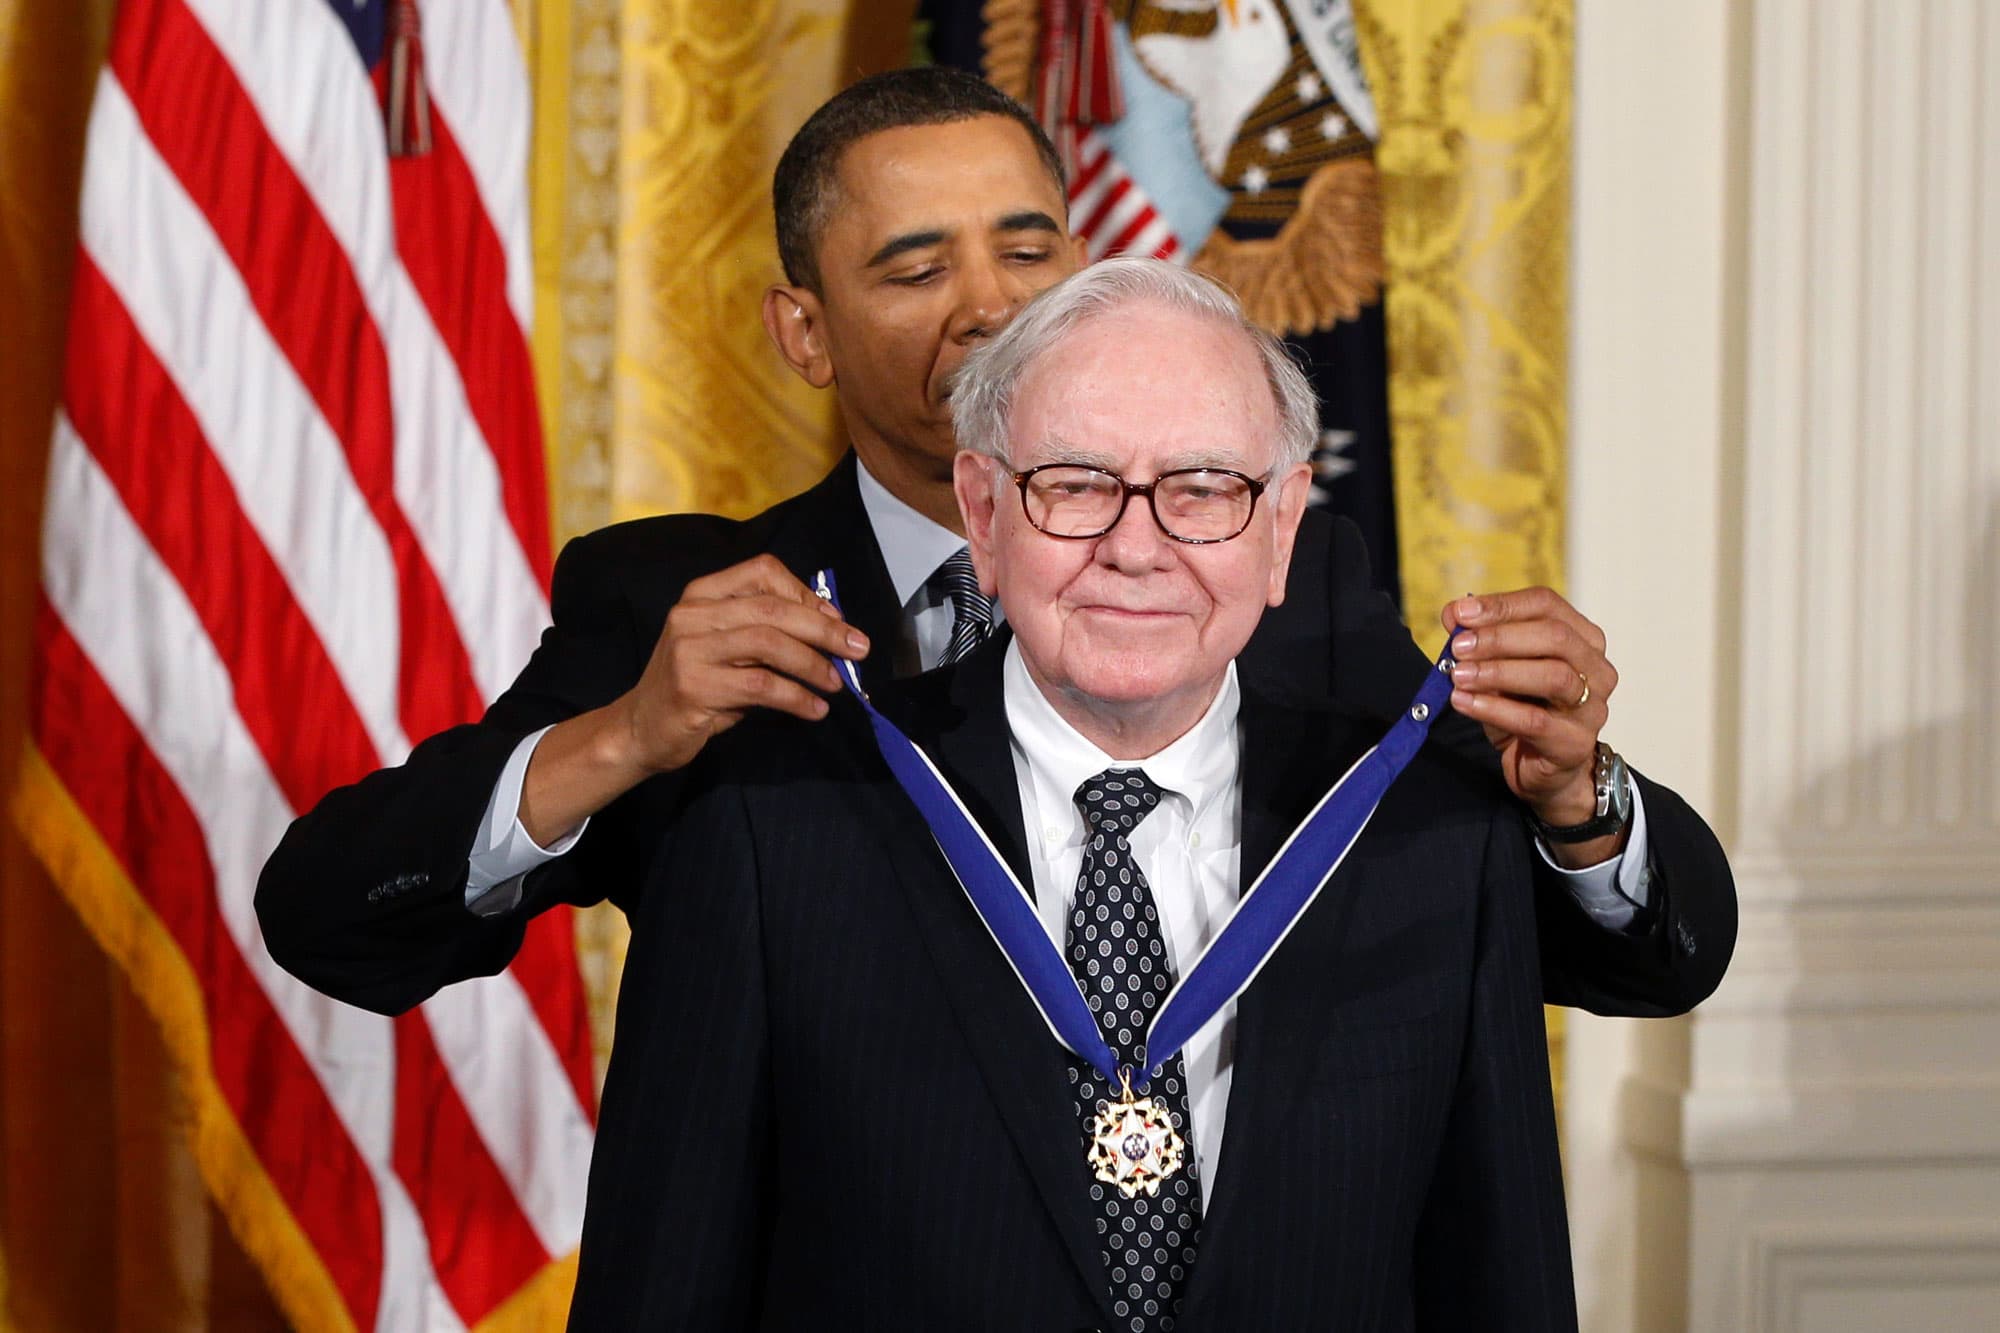 Obama Buffett Medal